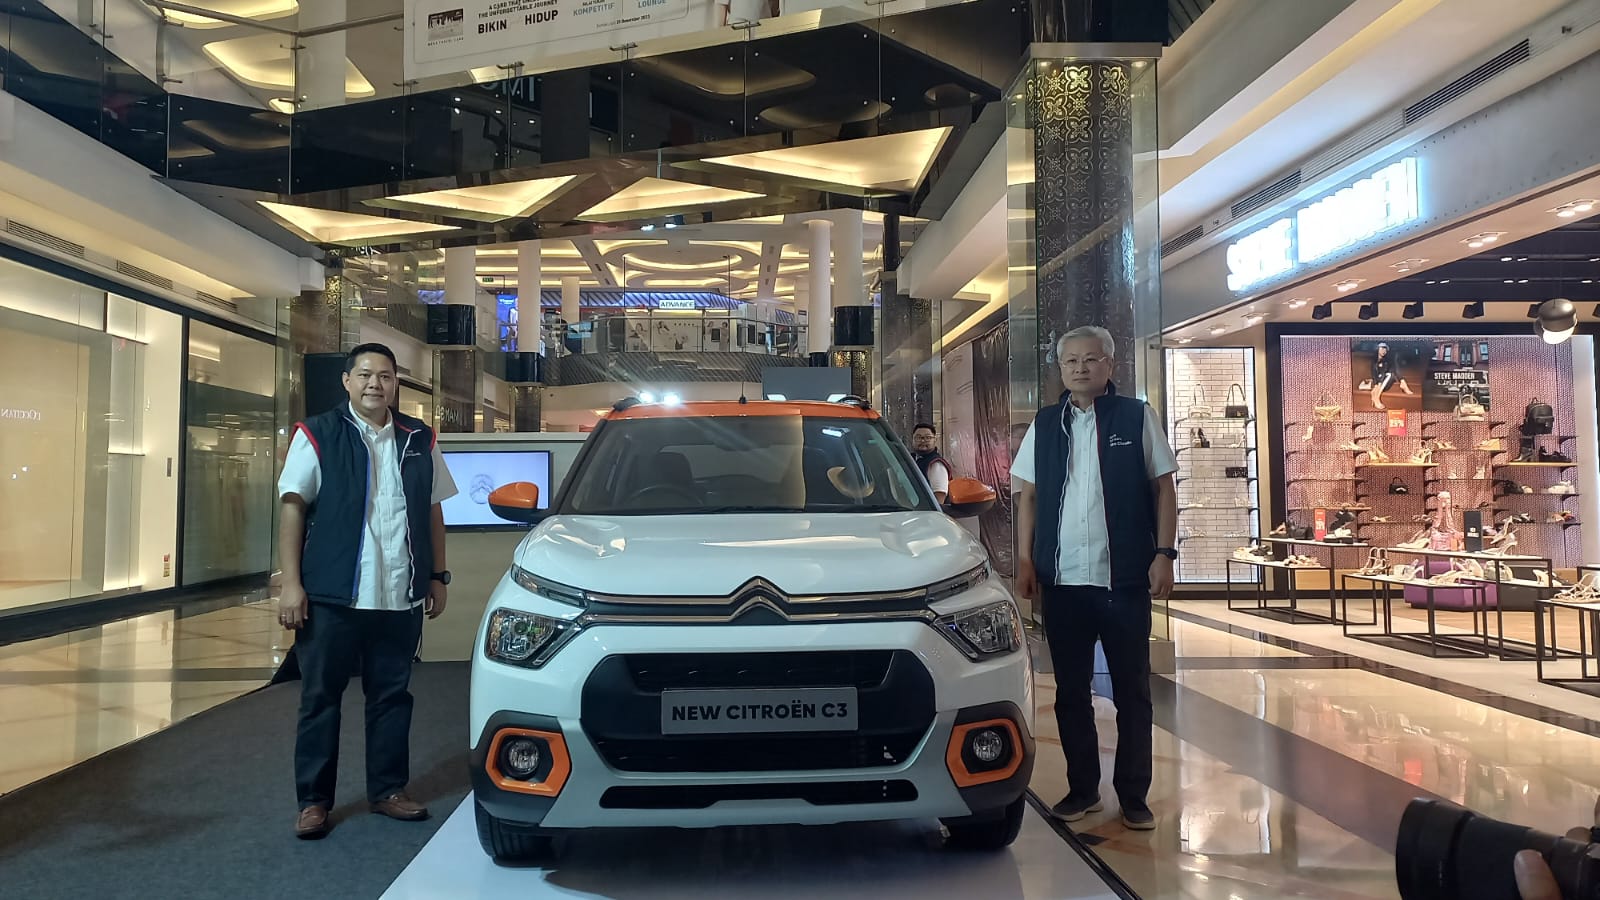 Citroën Hadir di Kota Bandung, Simak Promo Spesial dan Kelebihannya